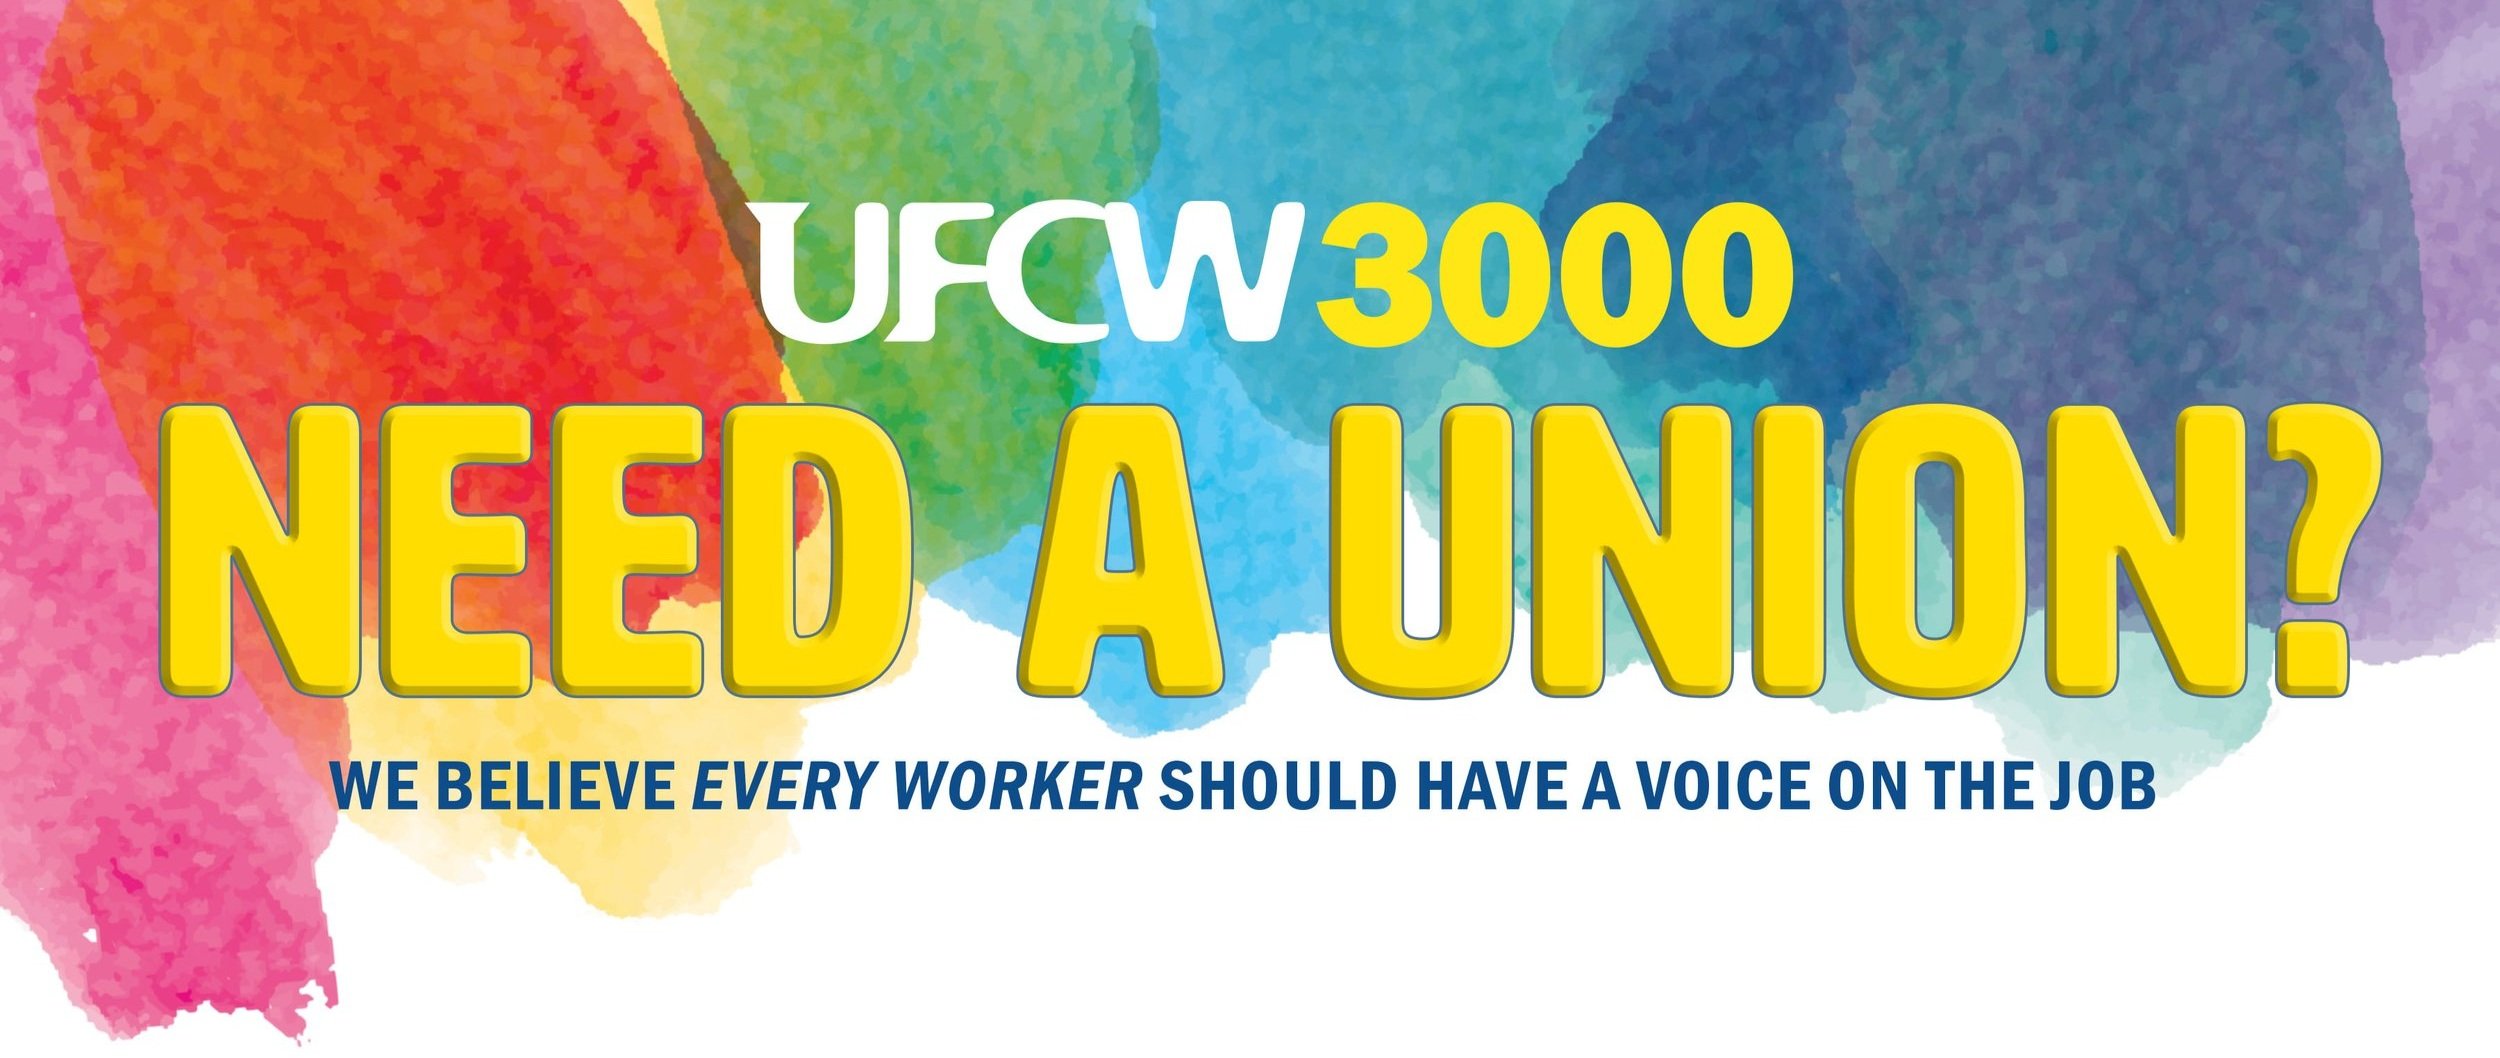 Need a Union? — UFCW 3000